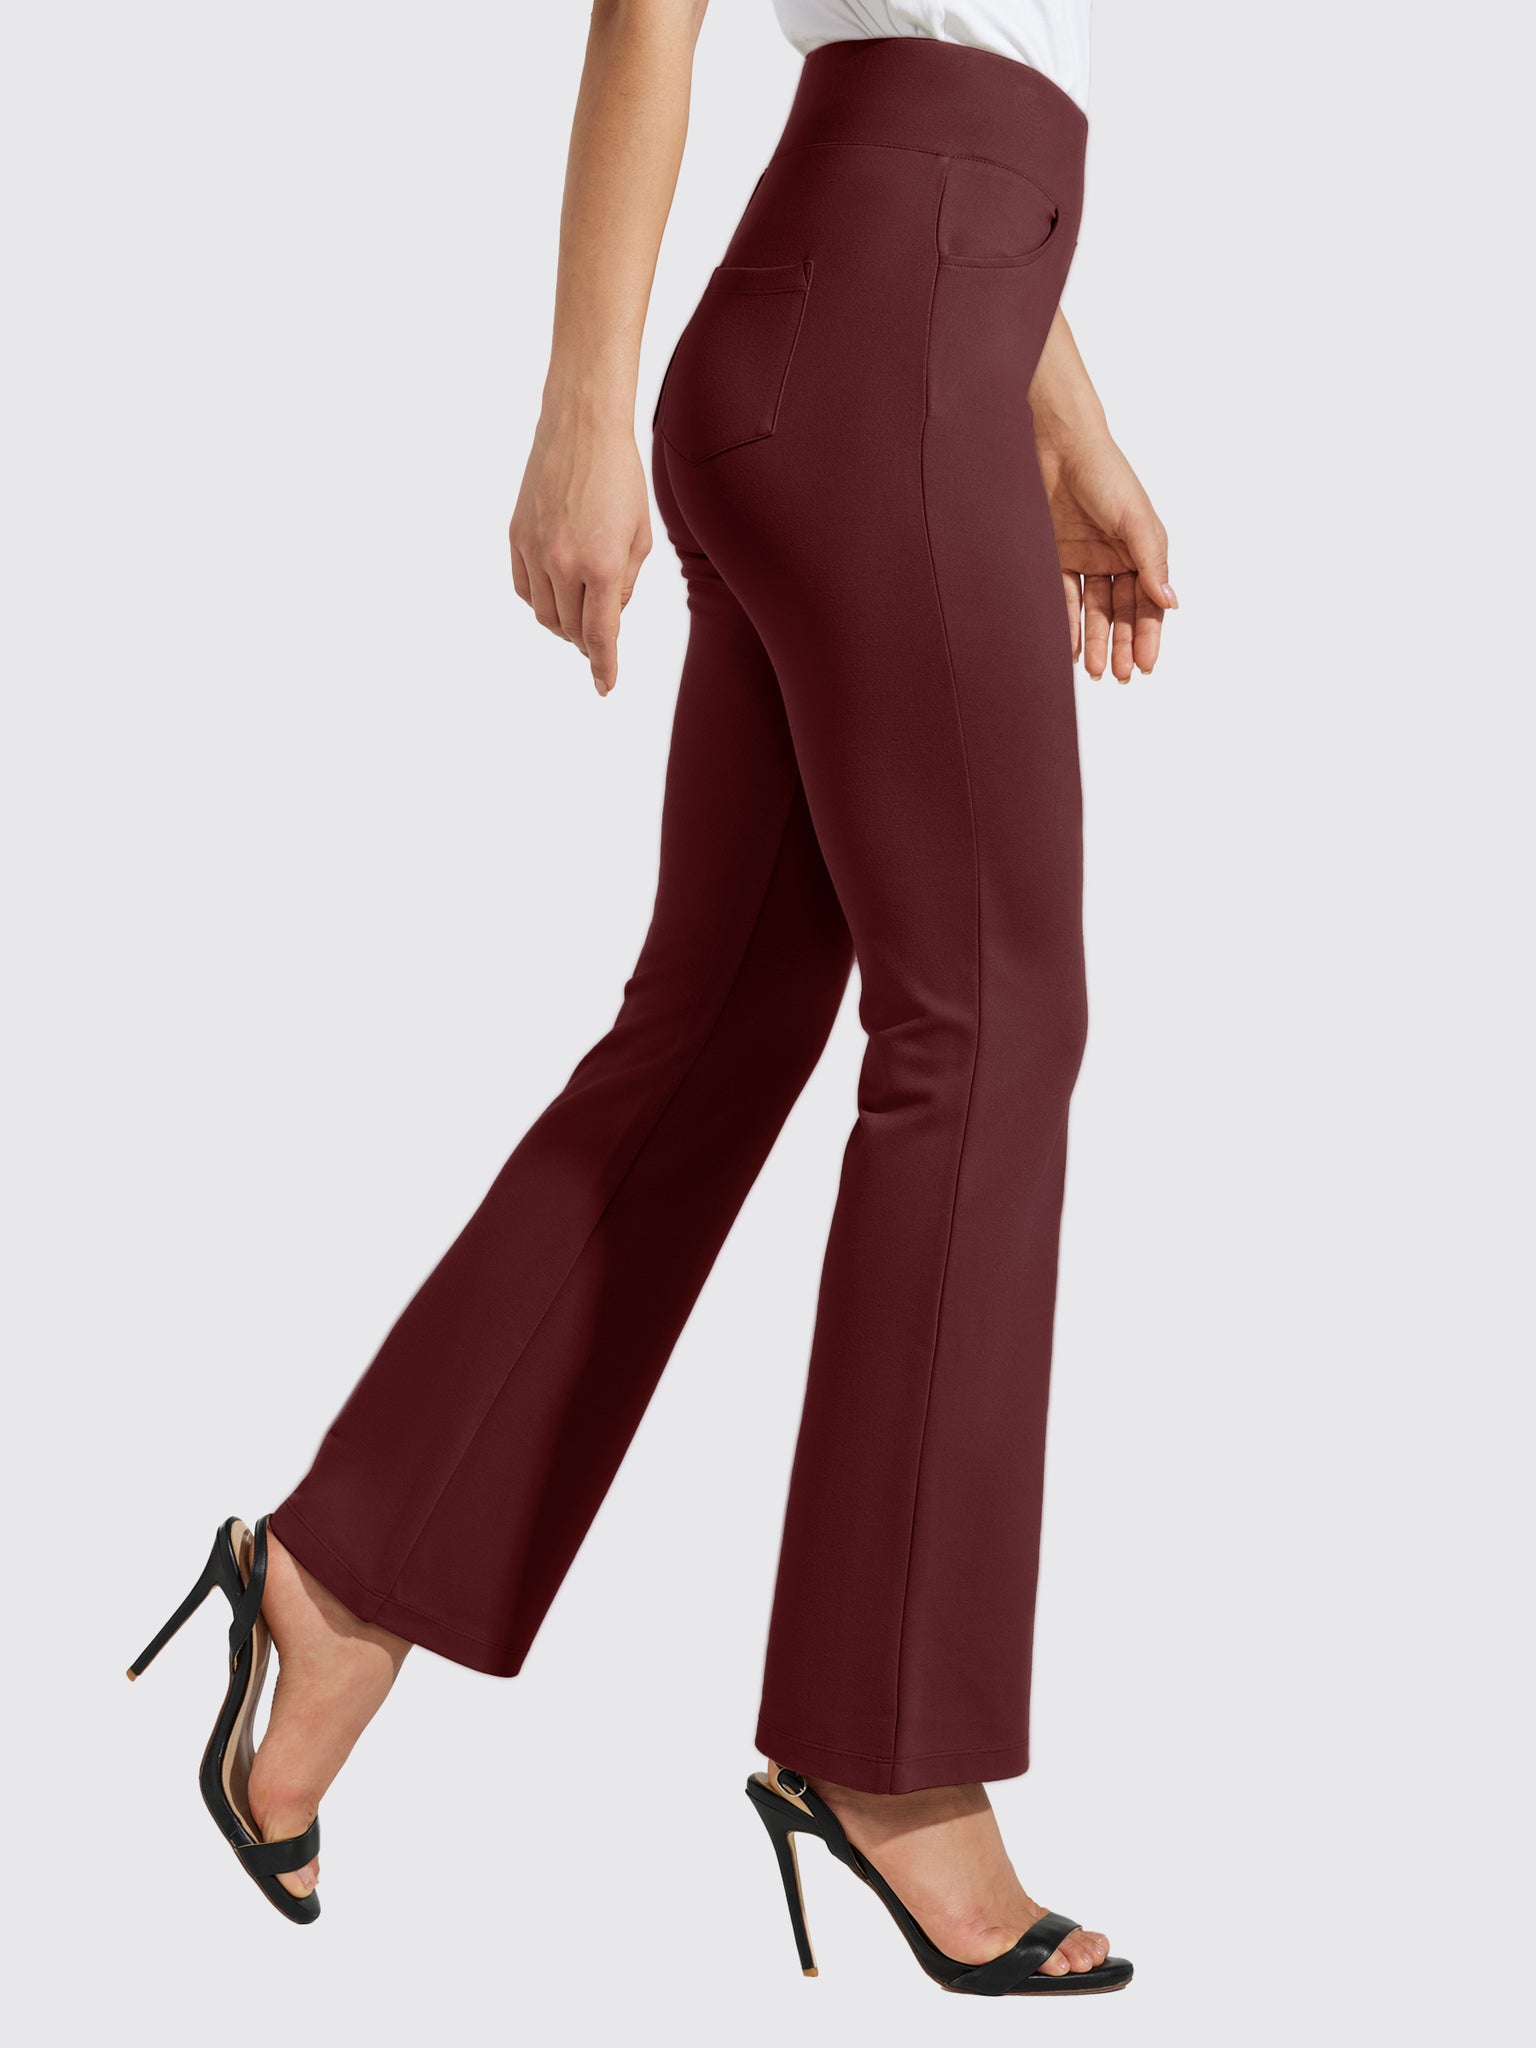 Women's Pull-On Slim Bootcut Pants_WineRed_model3